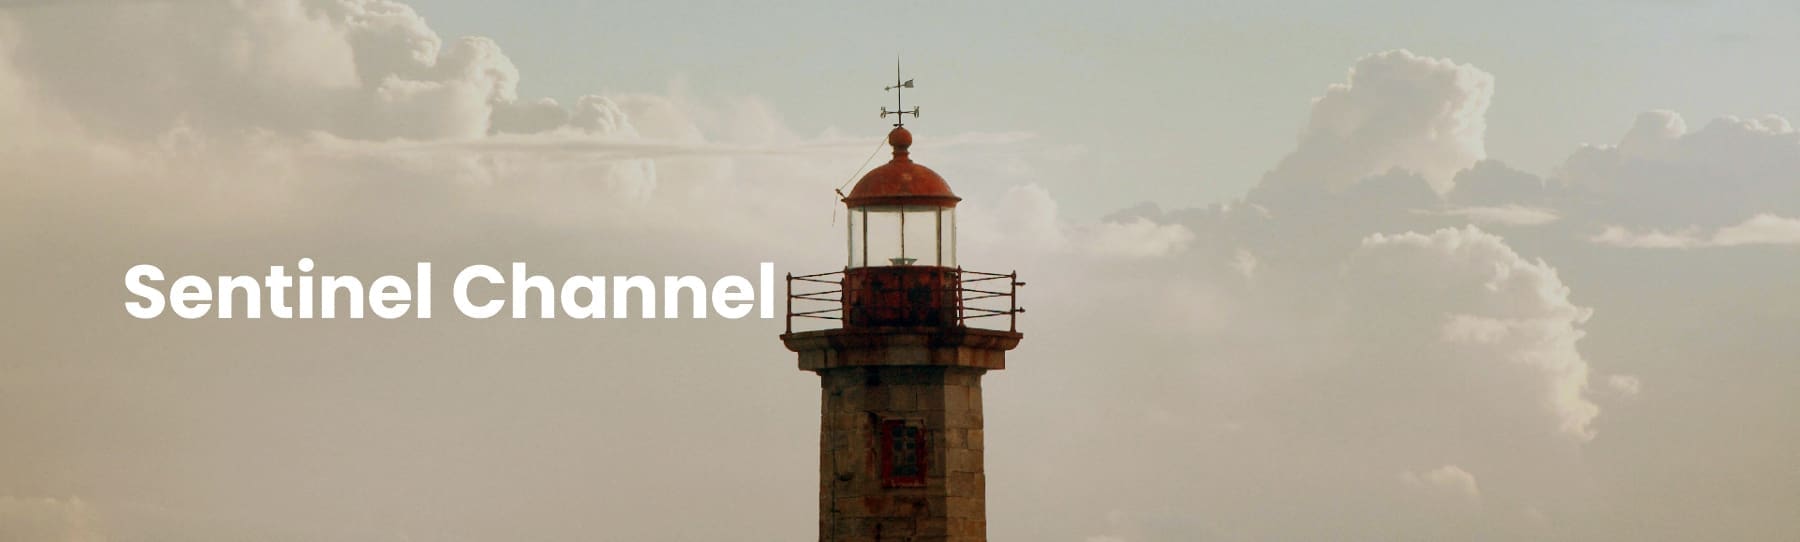 Sentinel Channel | ImpactHub Málaga